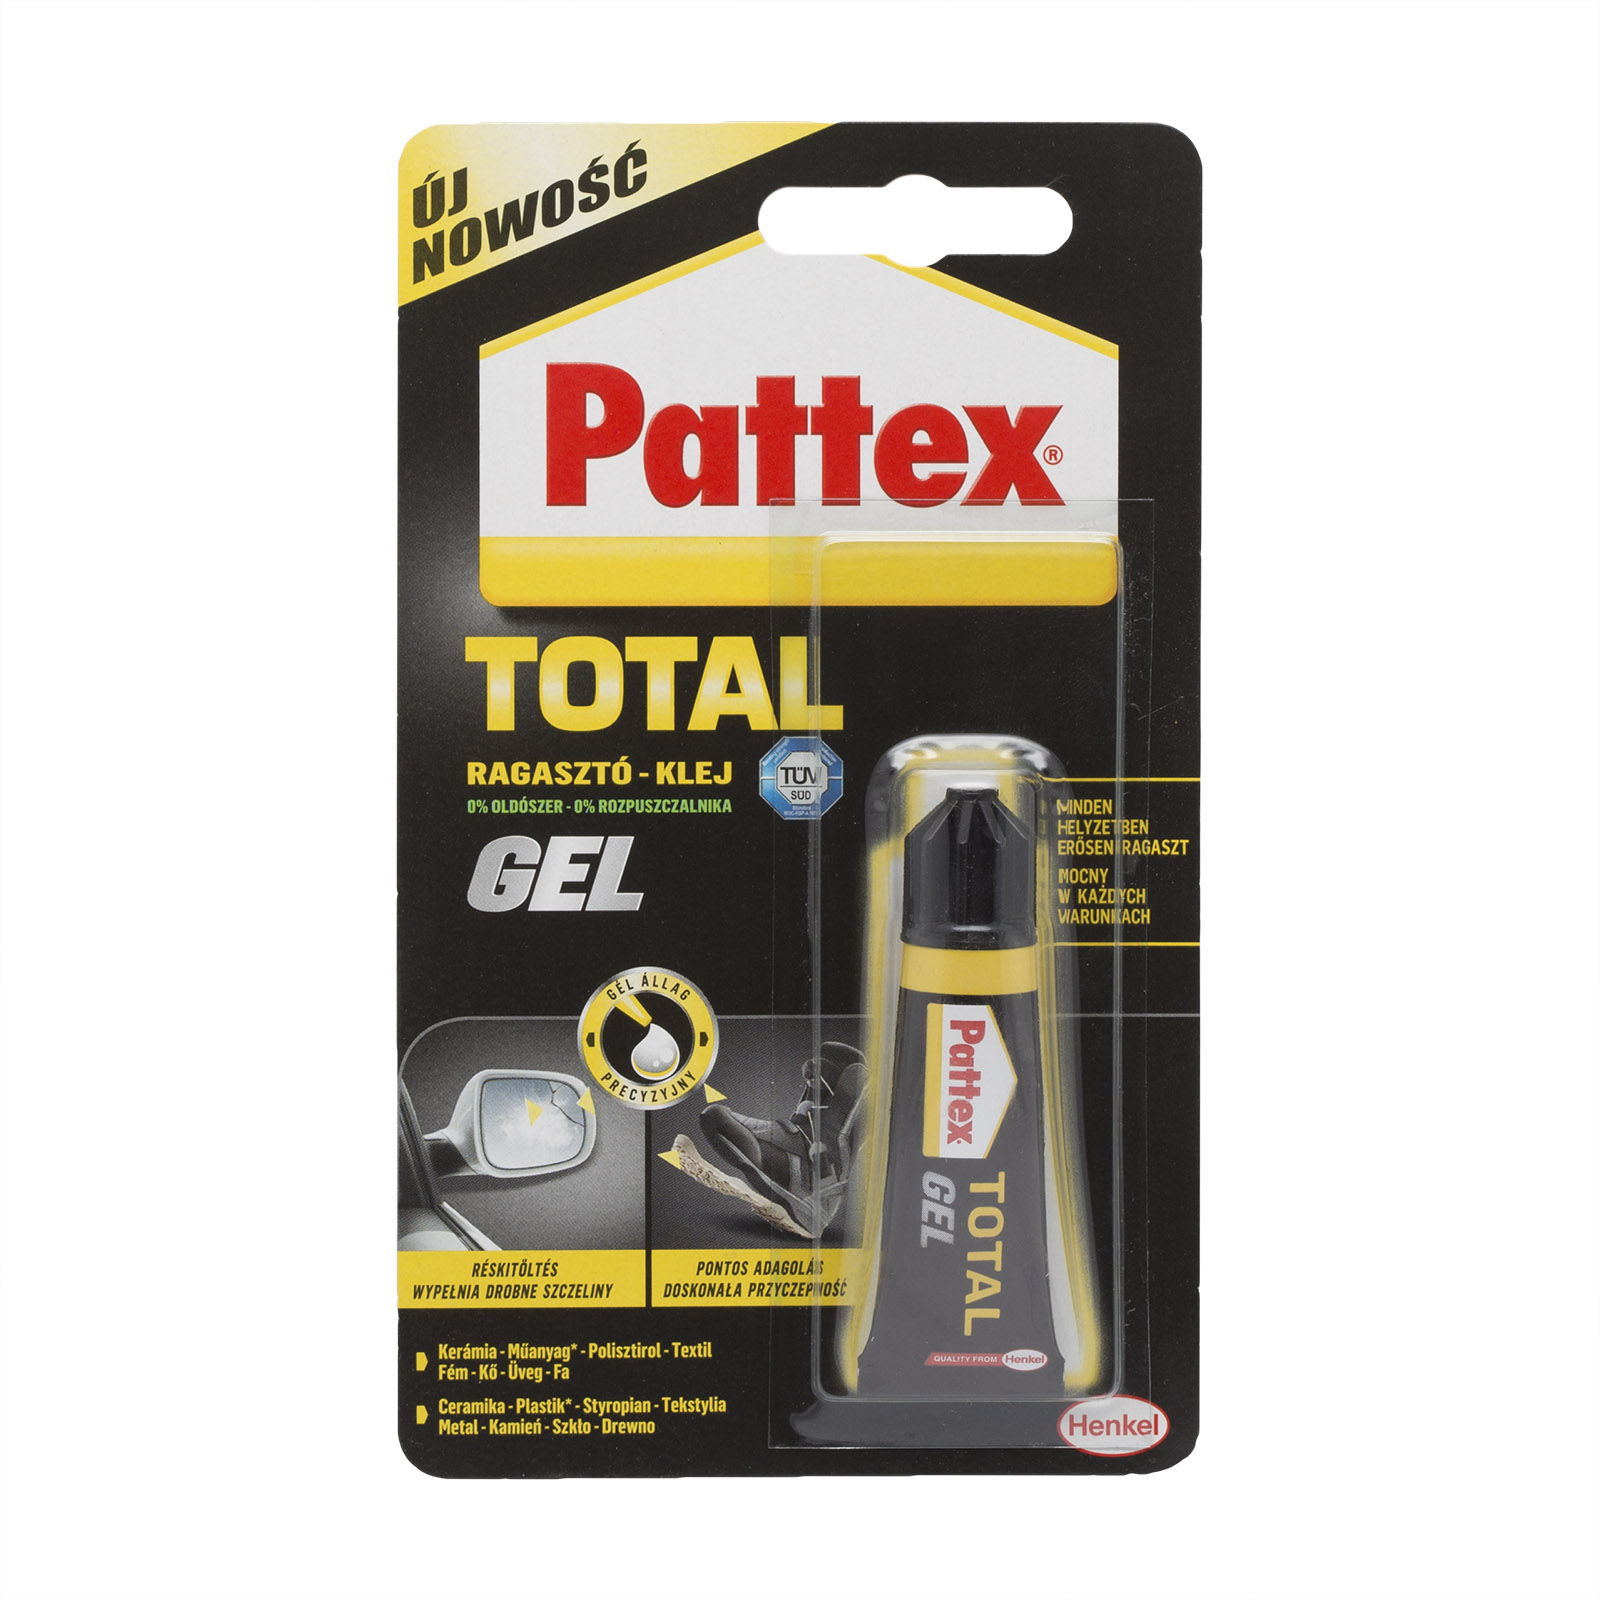 Pattex Total Gel8 g Best CarHome